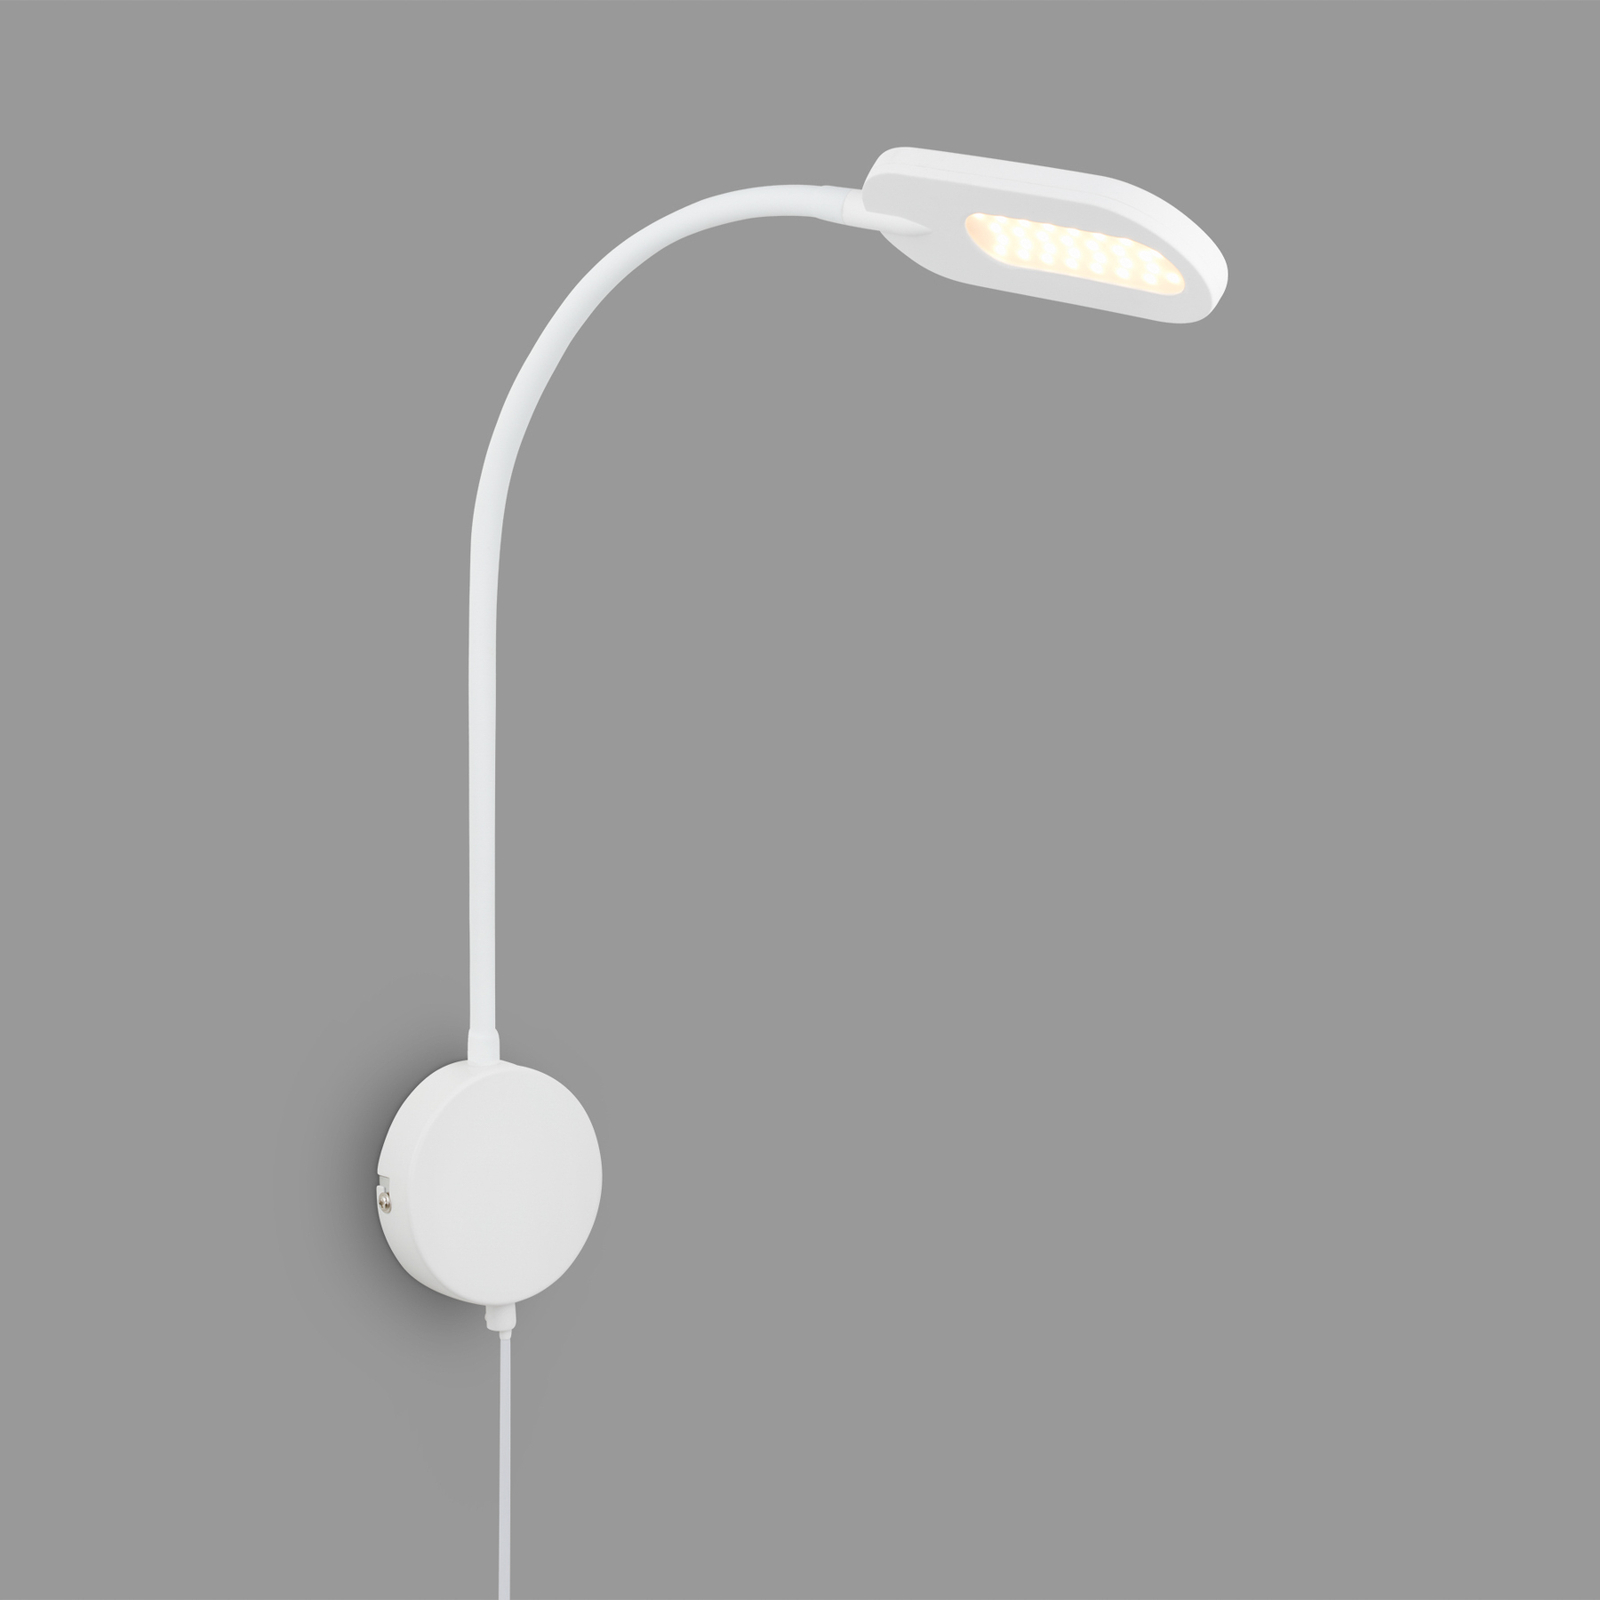 LED wandlamp 2177016 met dimmer, wit